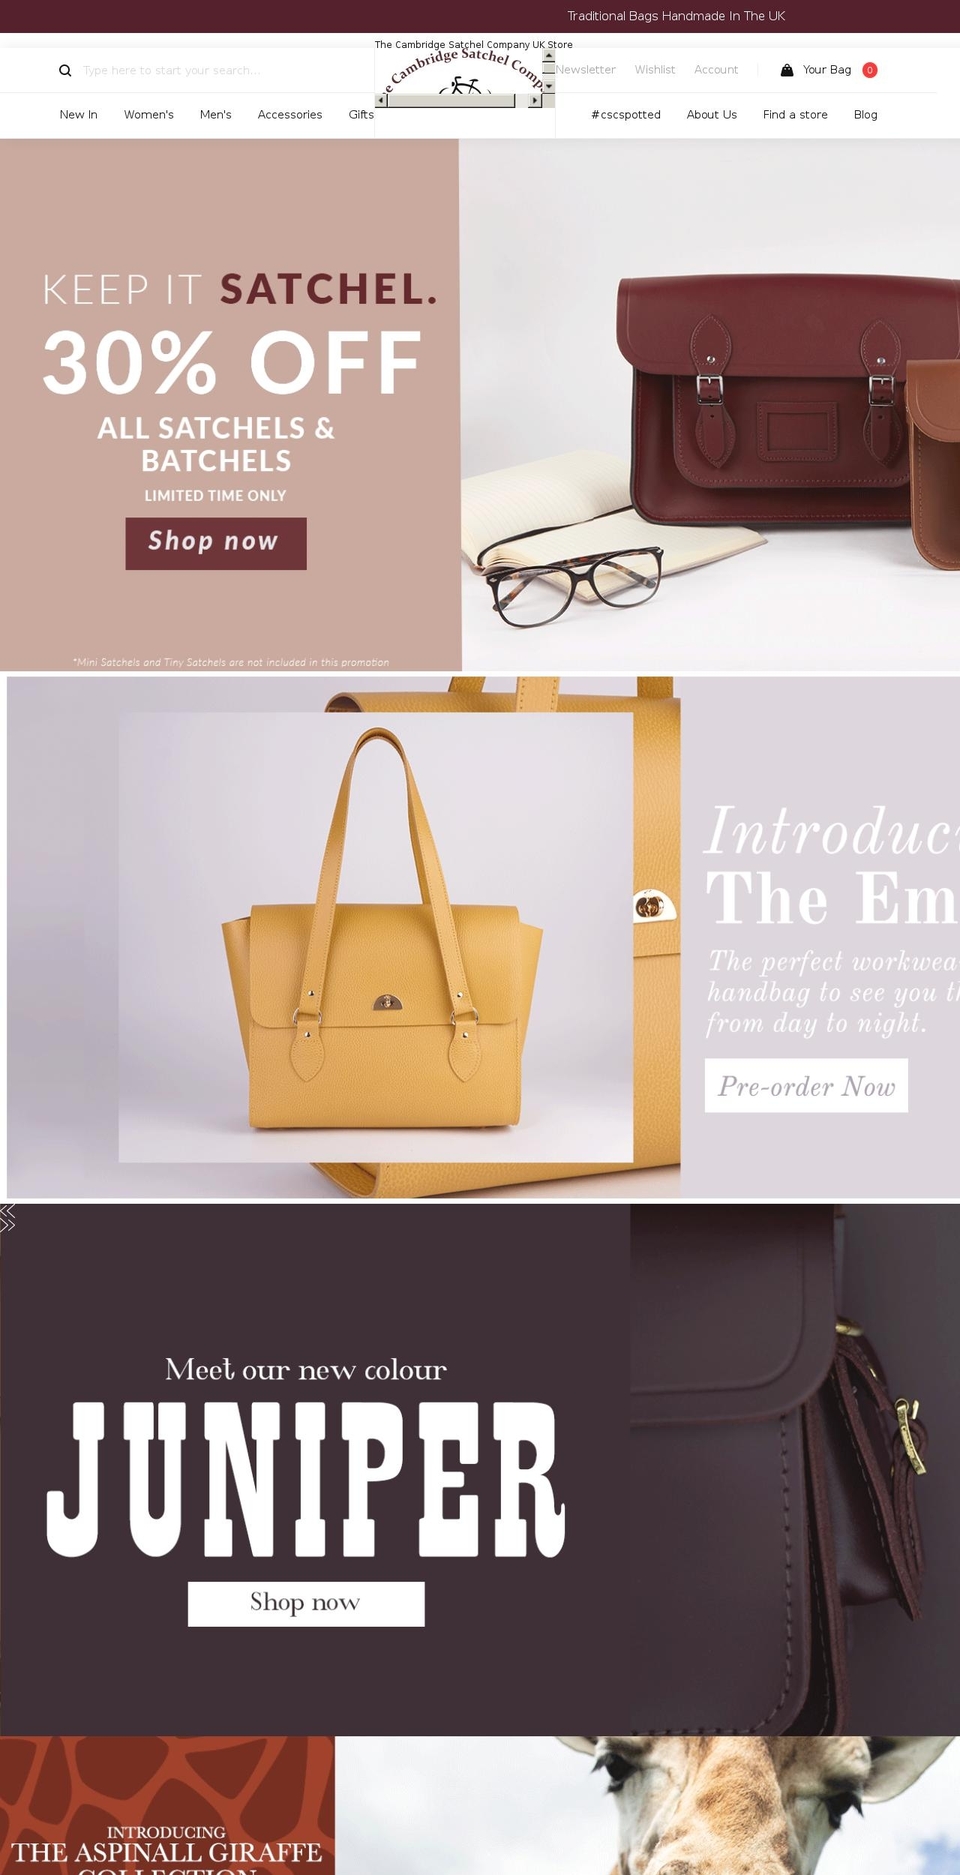 cambridge-satchels.co shopify website screenshot